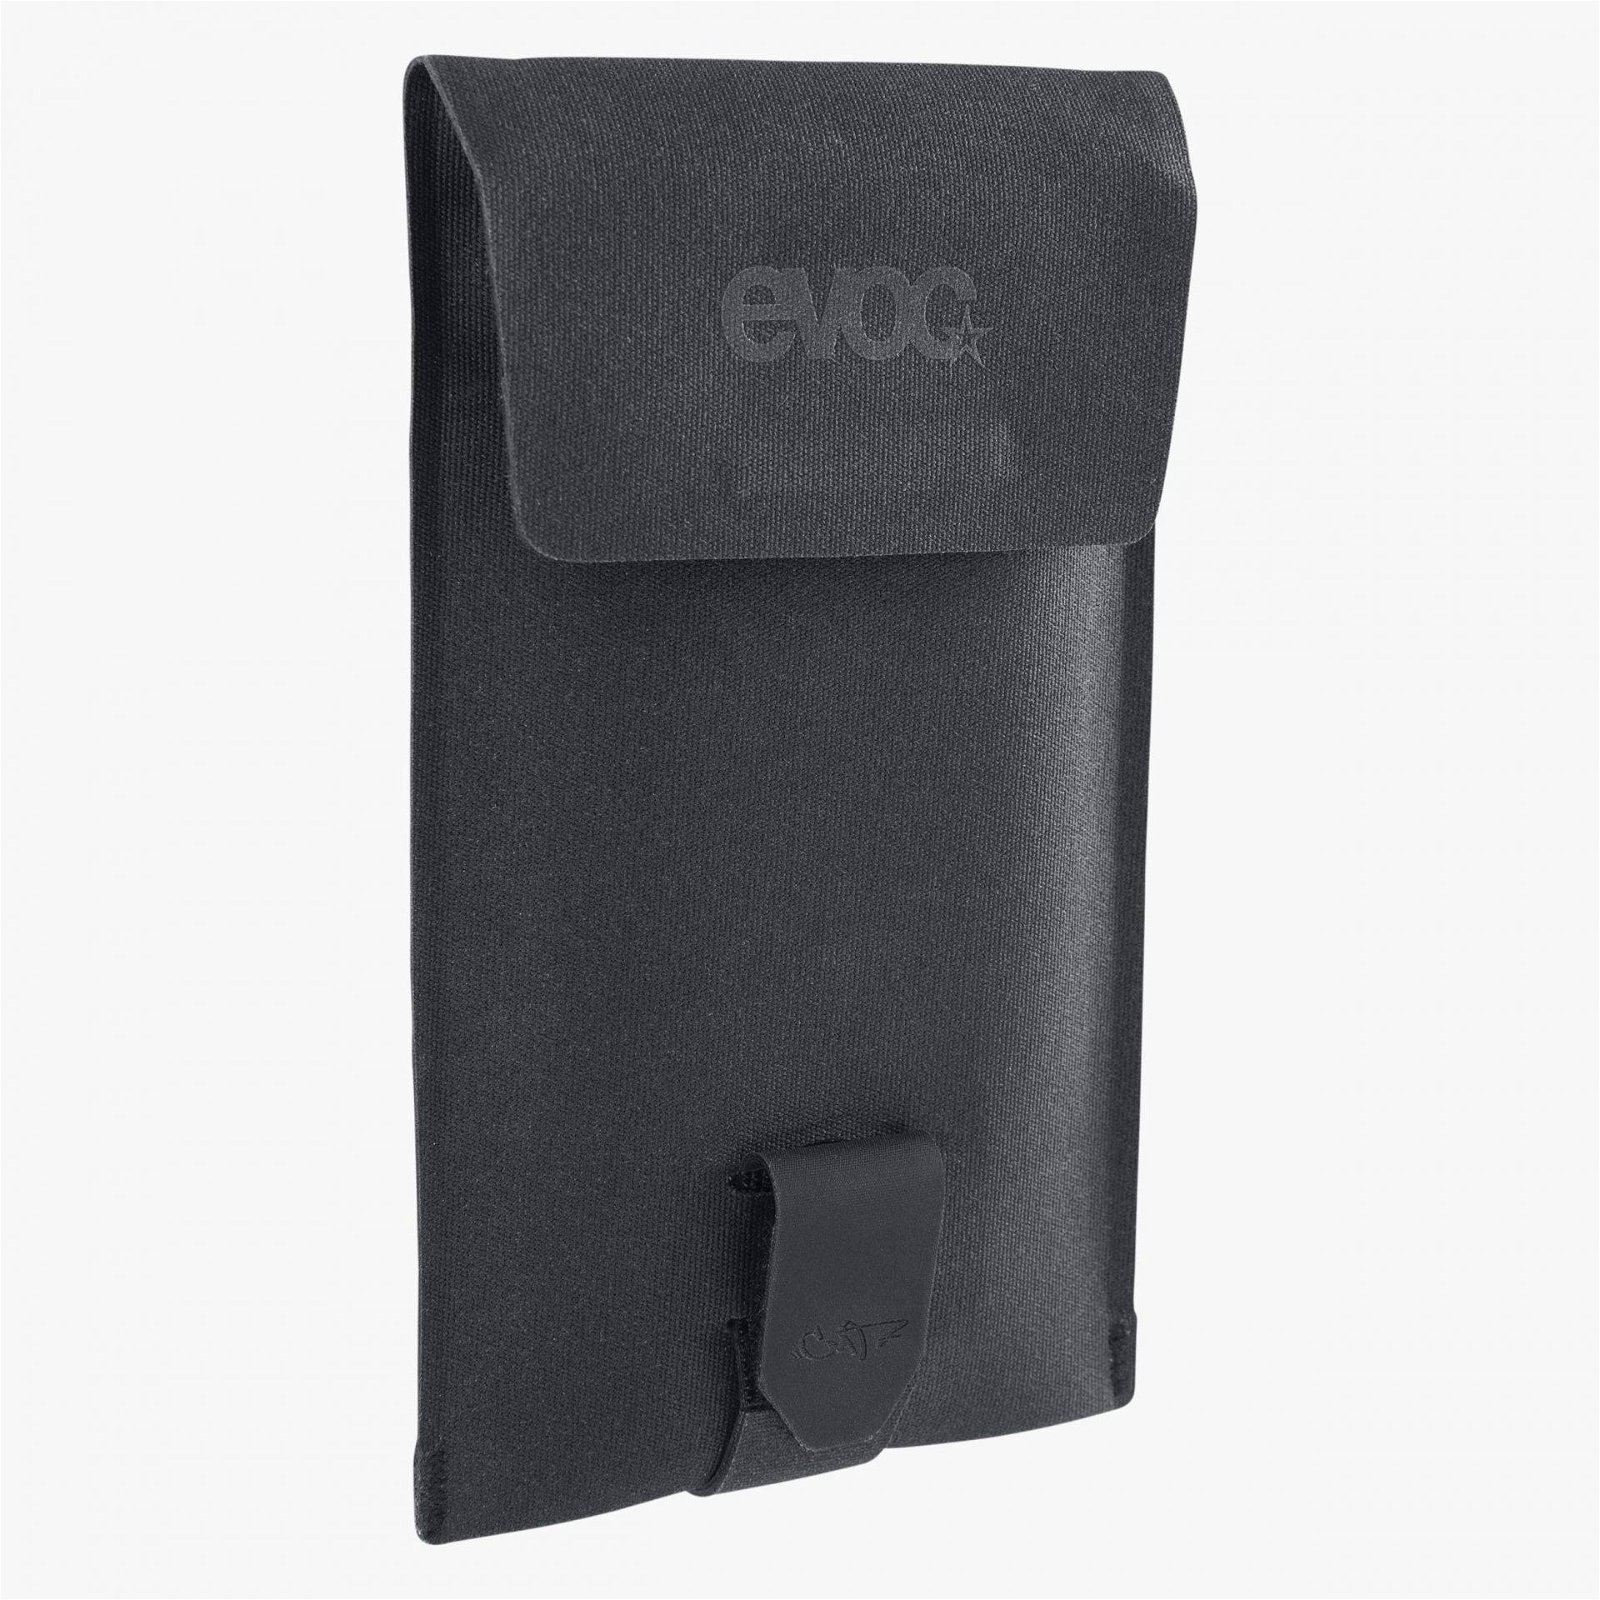 EVOC Phone Pouch